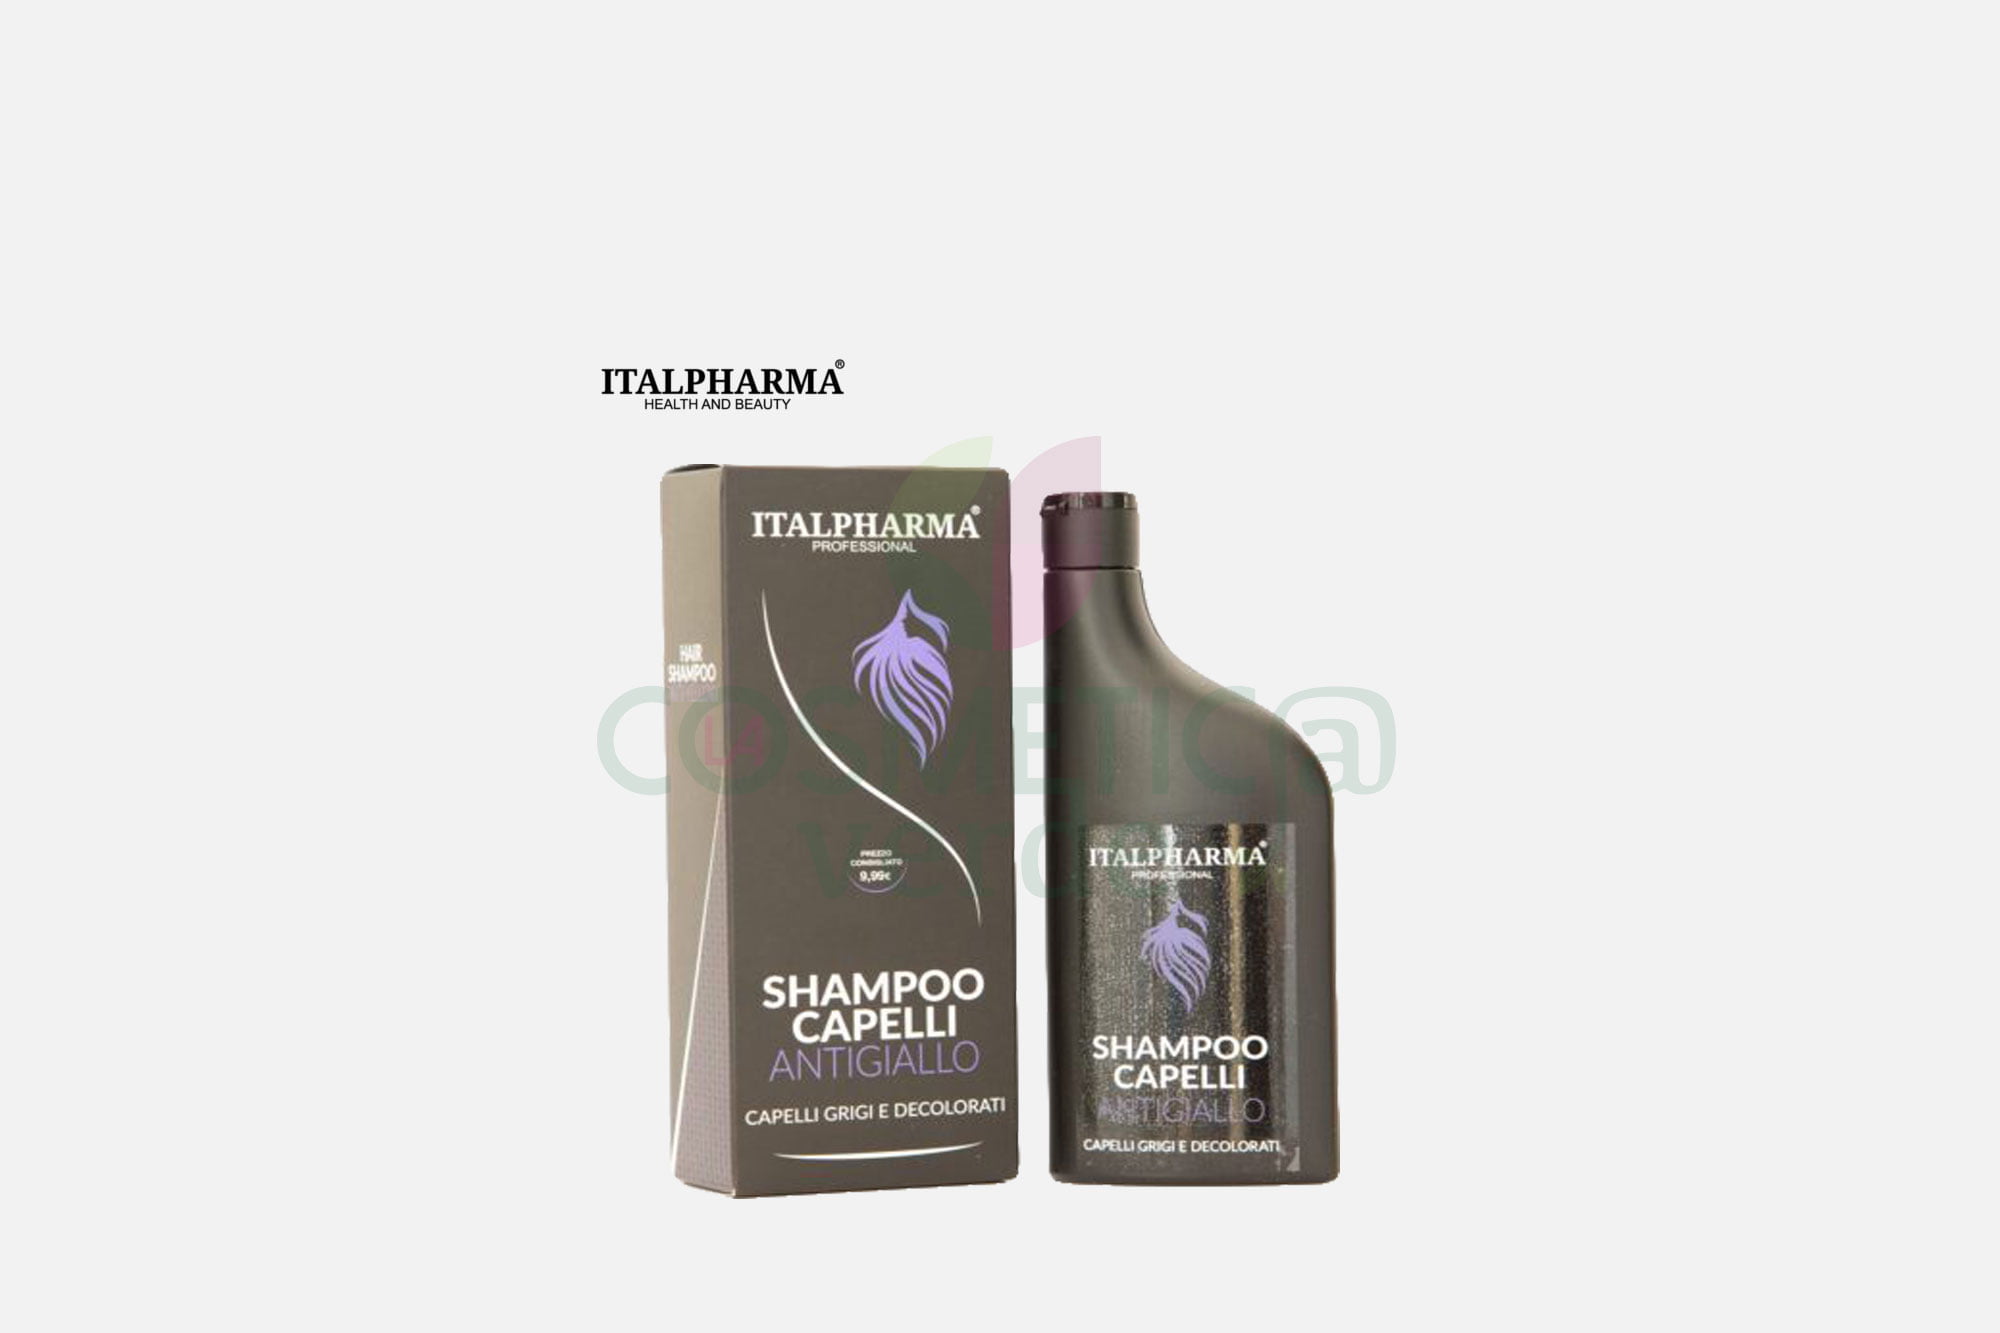 Shampoo antigiallo Italpharma